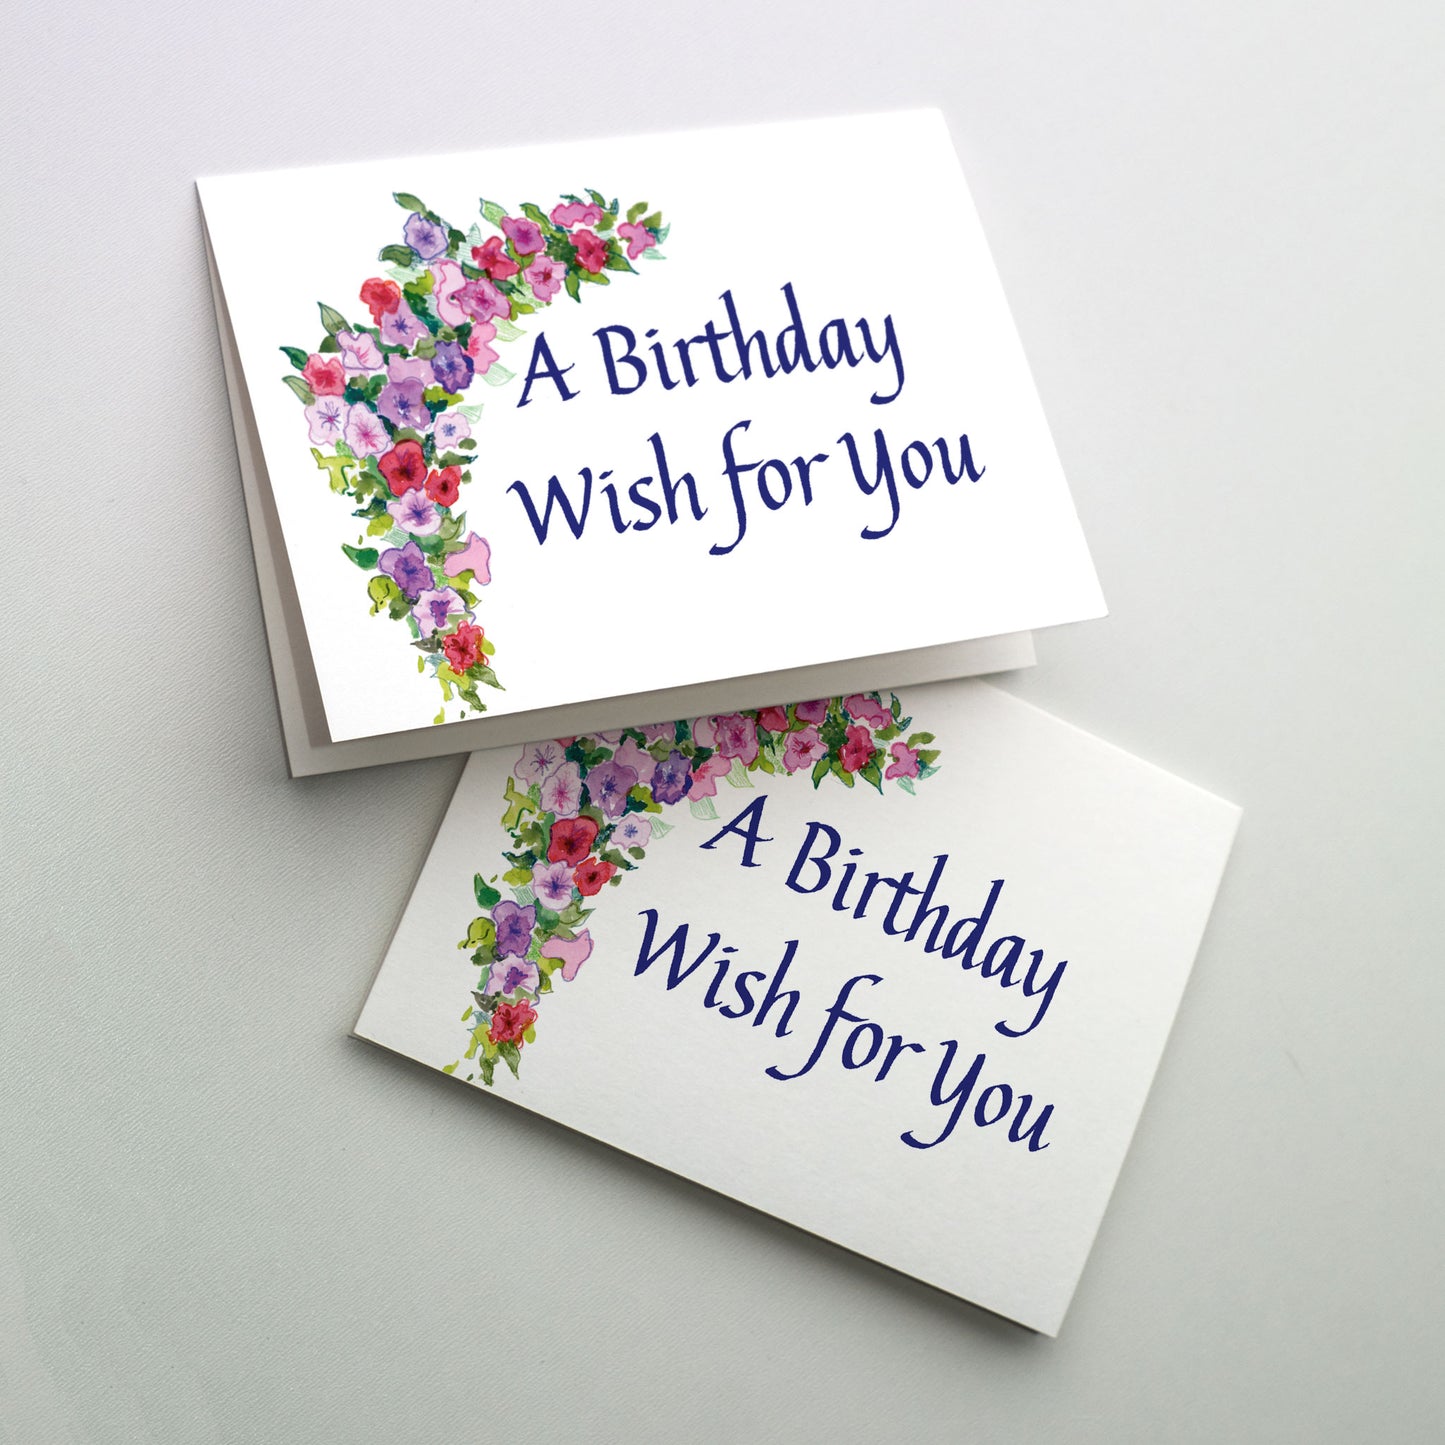 A Birthday Wish for You - Birthday Card